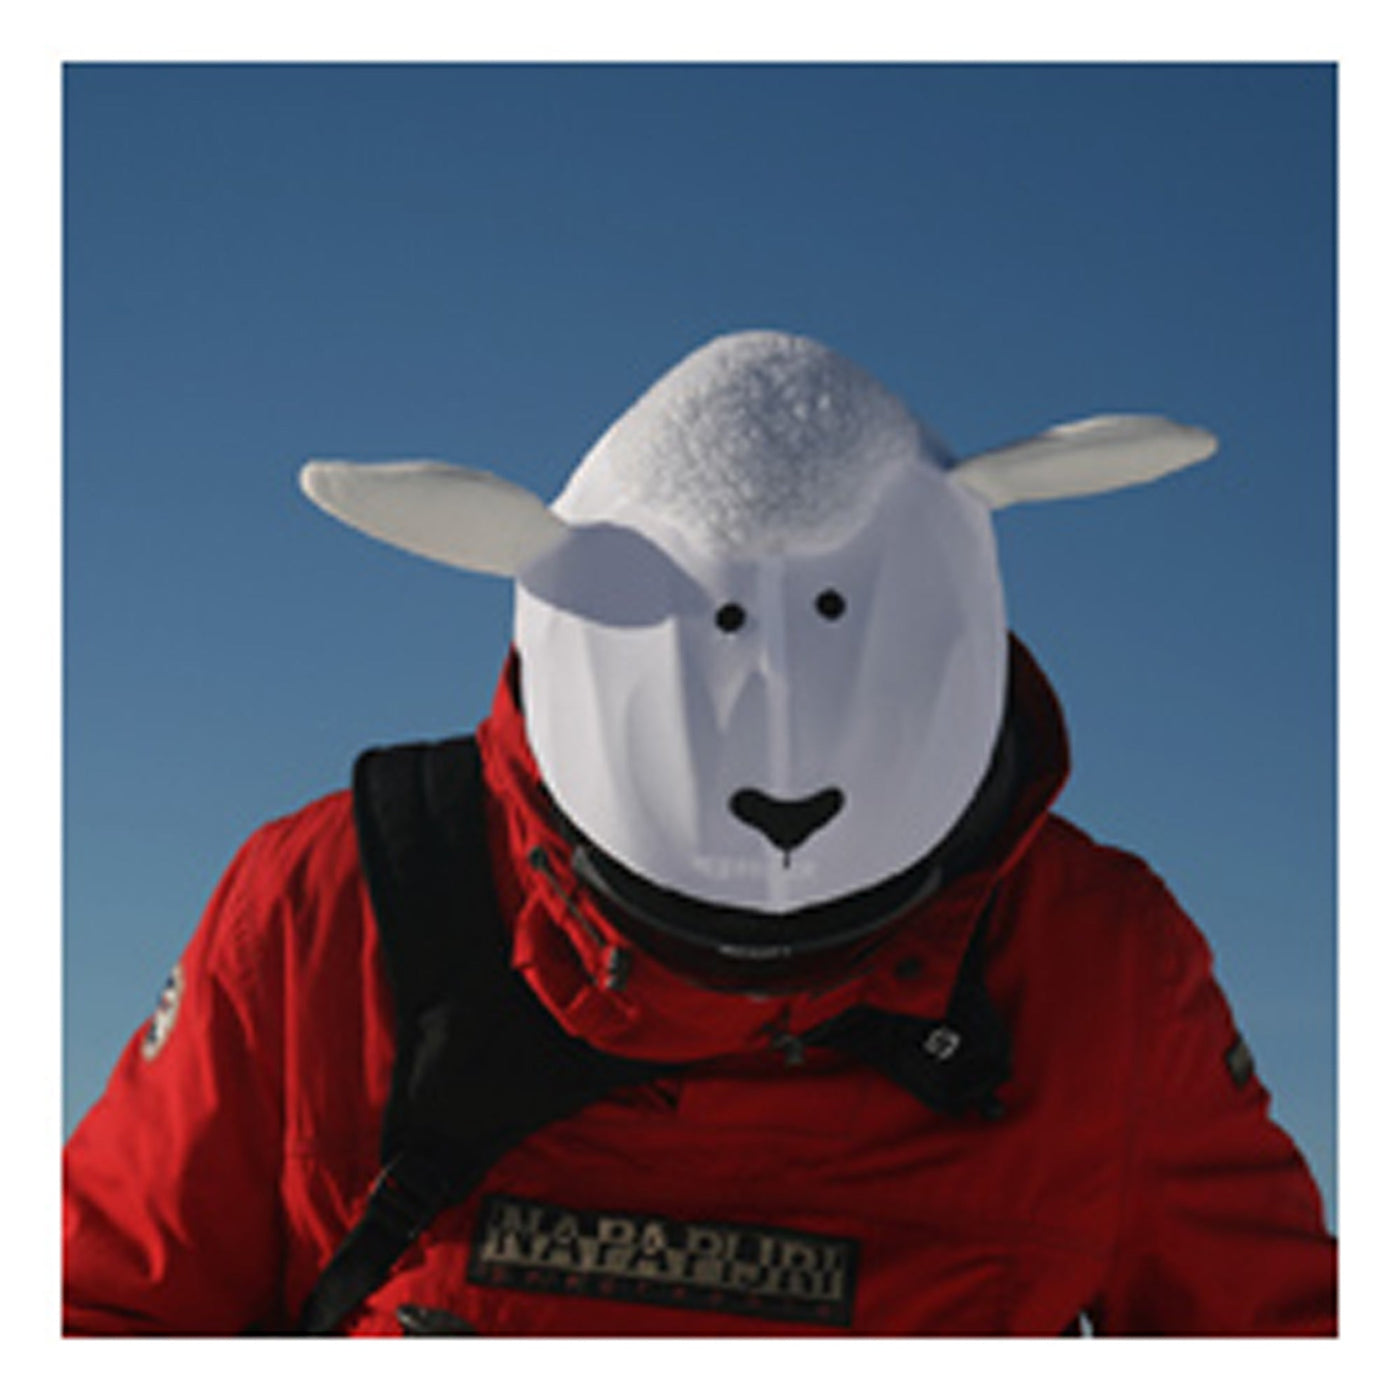 Coolcasc Animals Helmet Cover White Sheep.